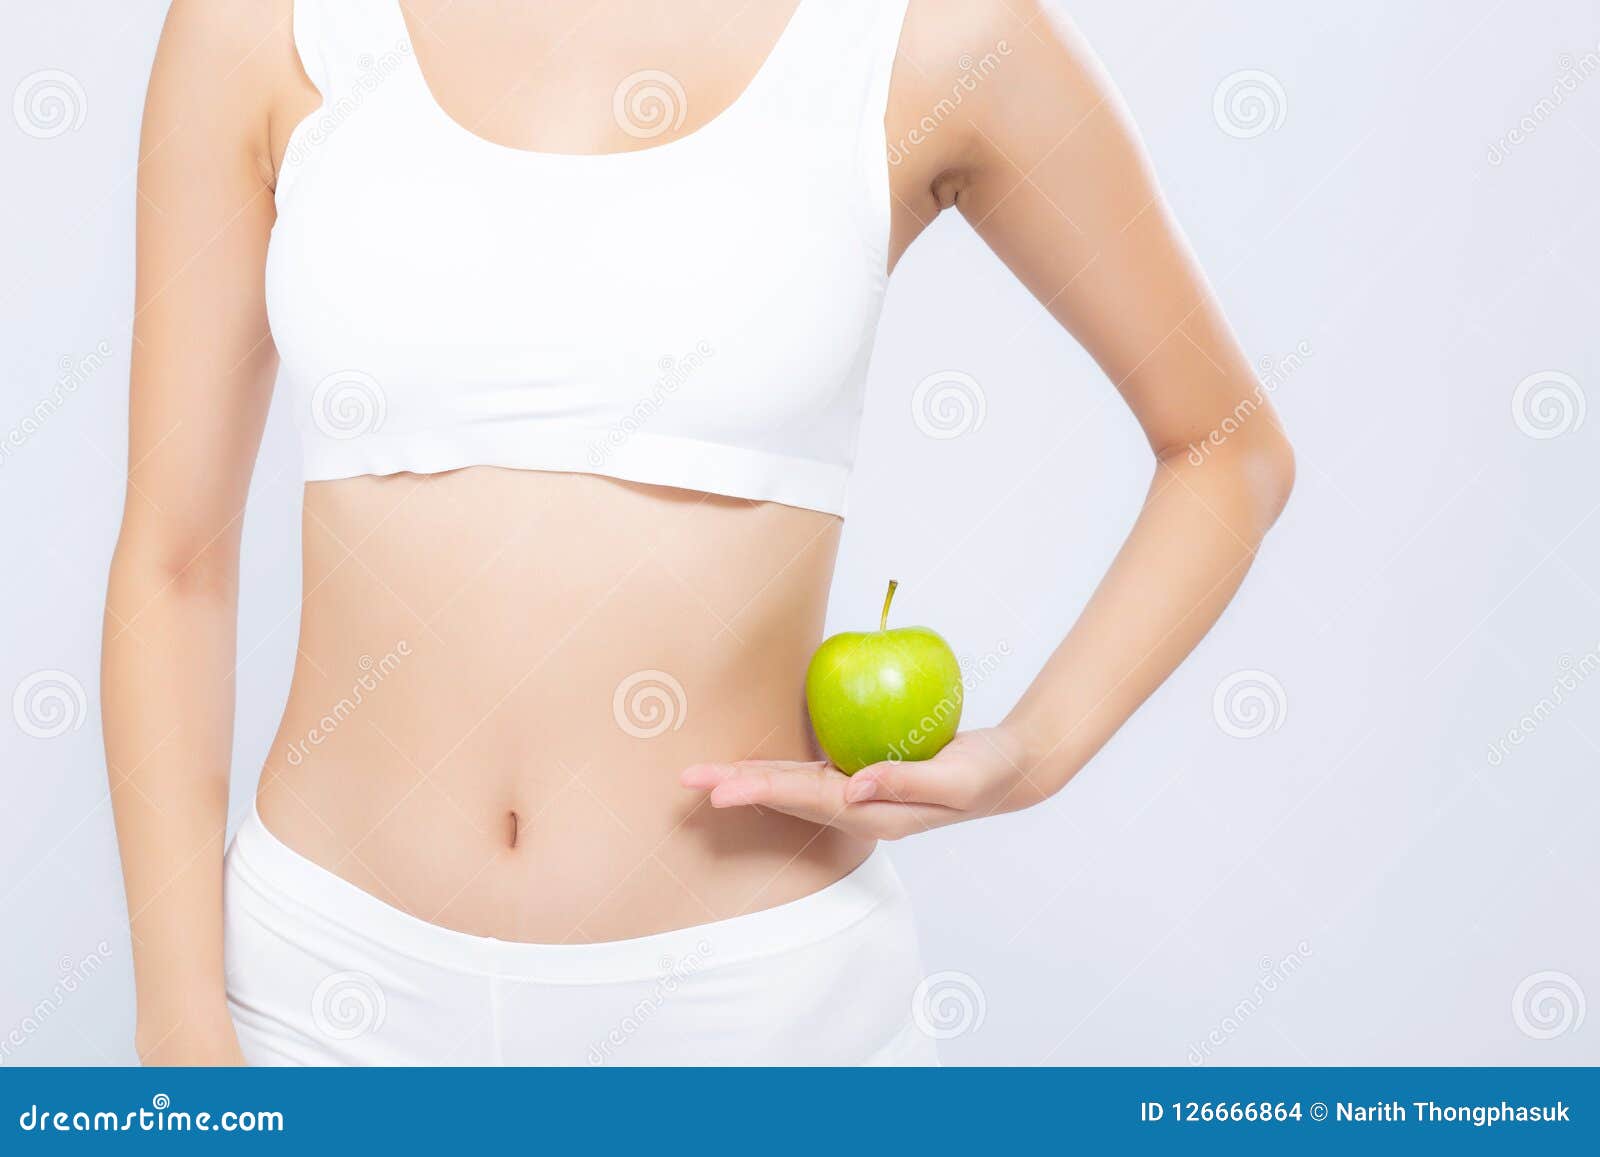 Apple Body Shape & Weight Loss